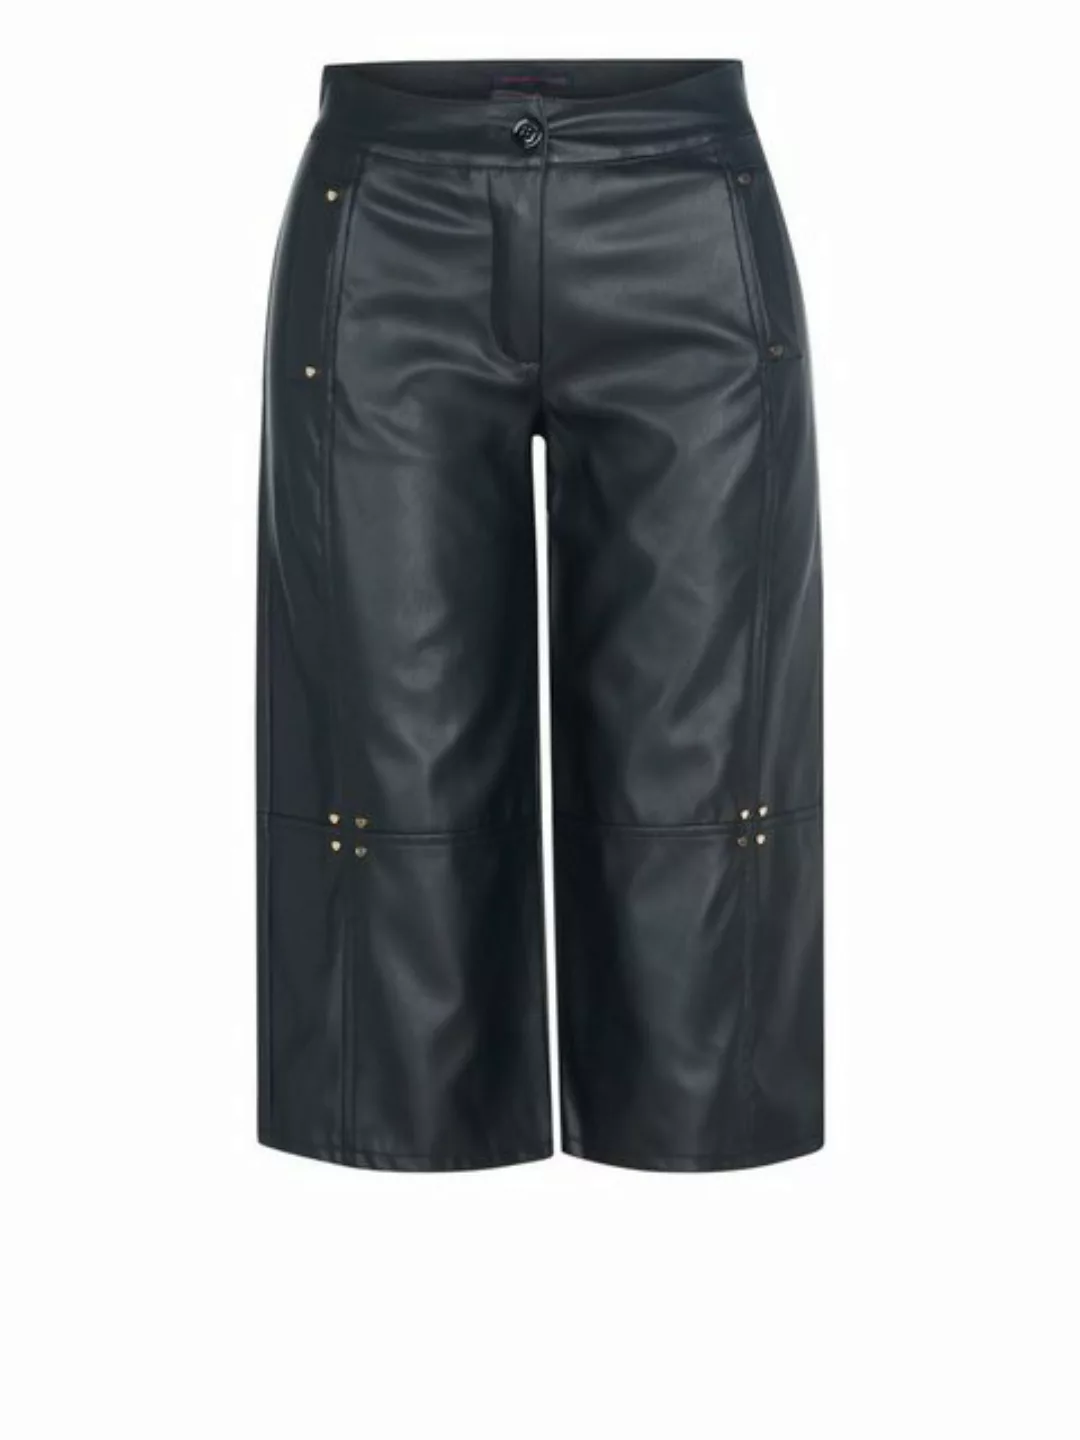 Trussardi Jeans Lederimitathose Trussardi jeans Hose schwarz günstig online kaufen